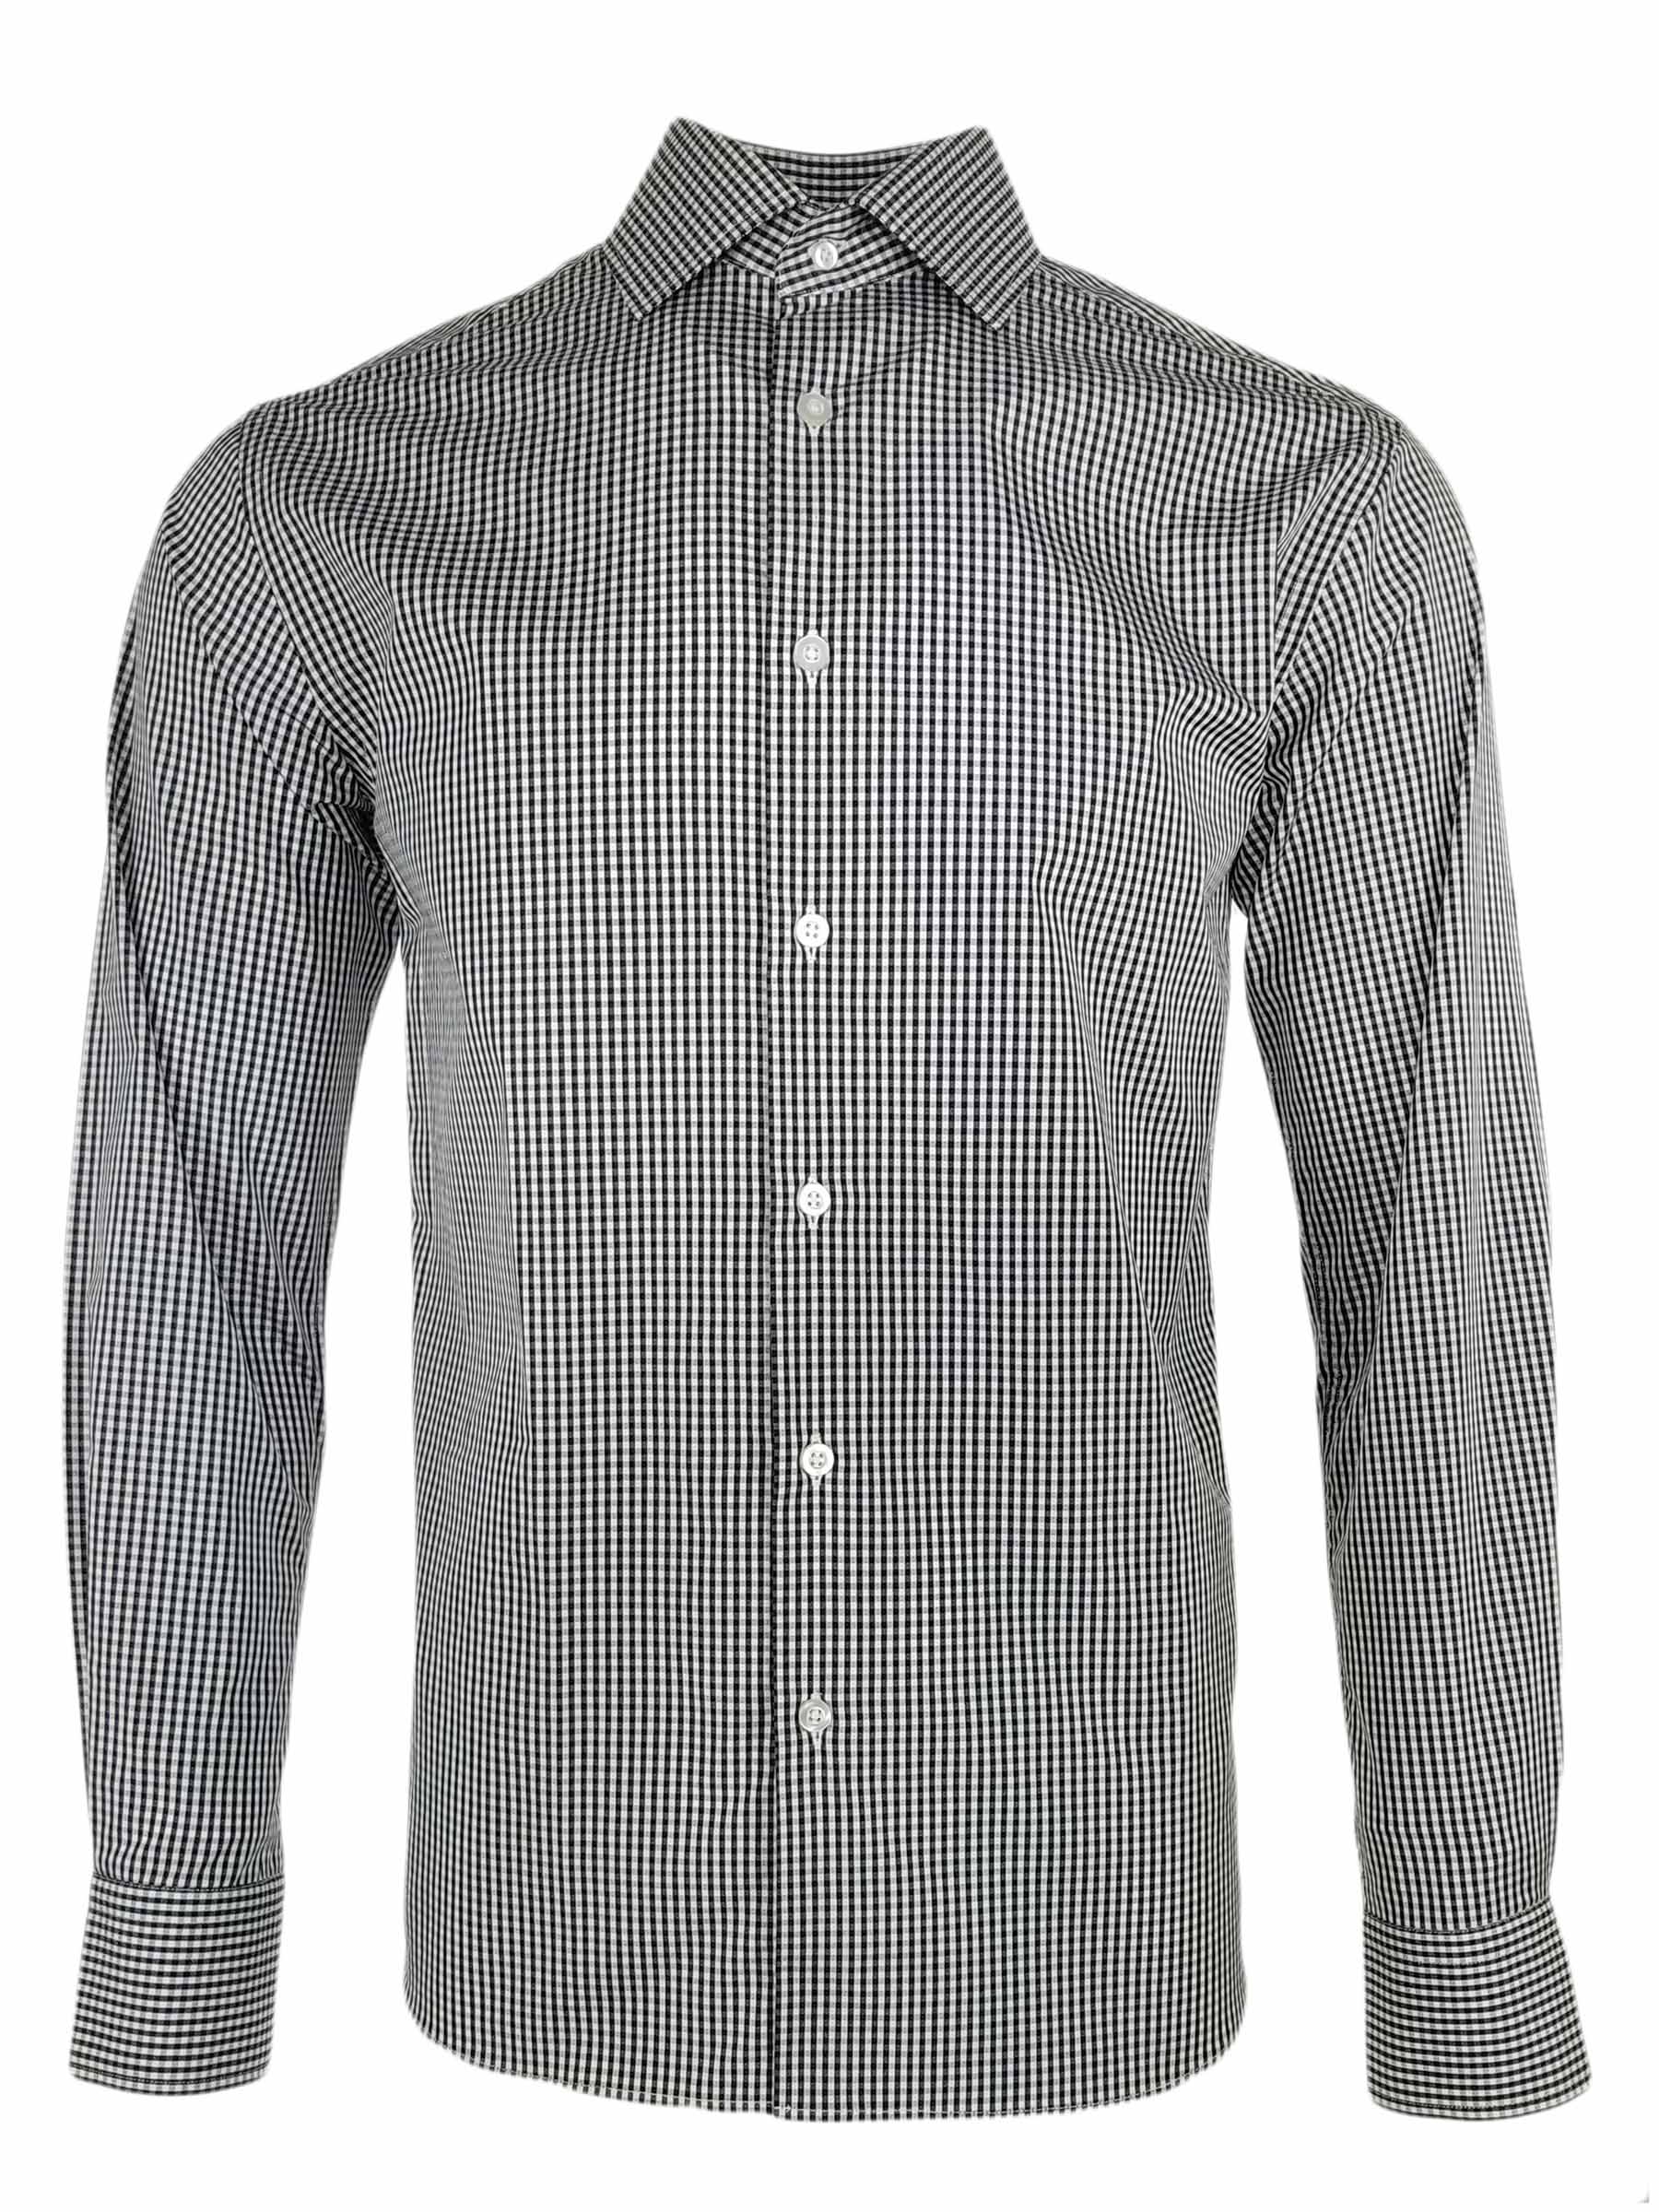 Men's Venice Check Shirt - Black White Check Long Sleeve | Uniform Edit